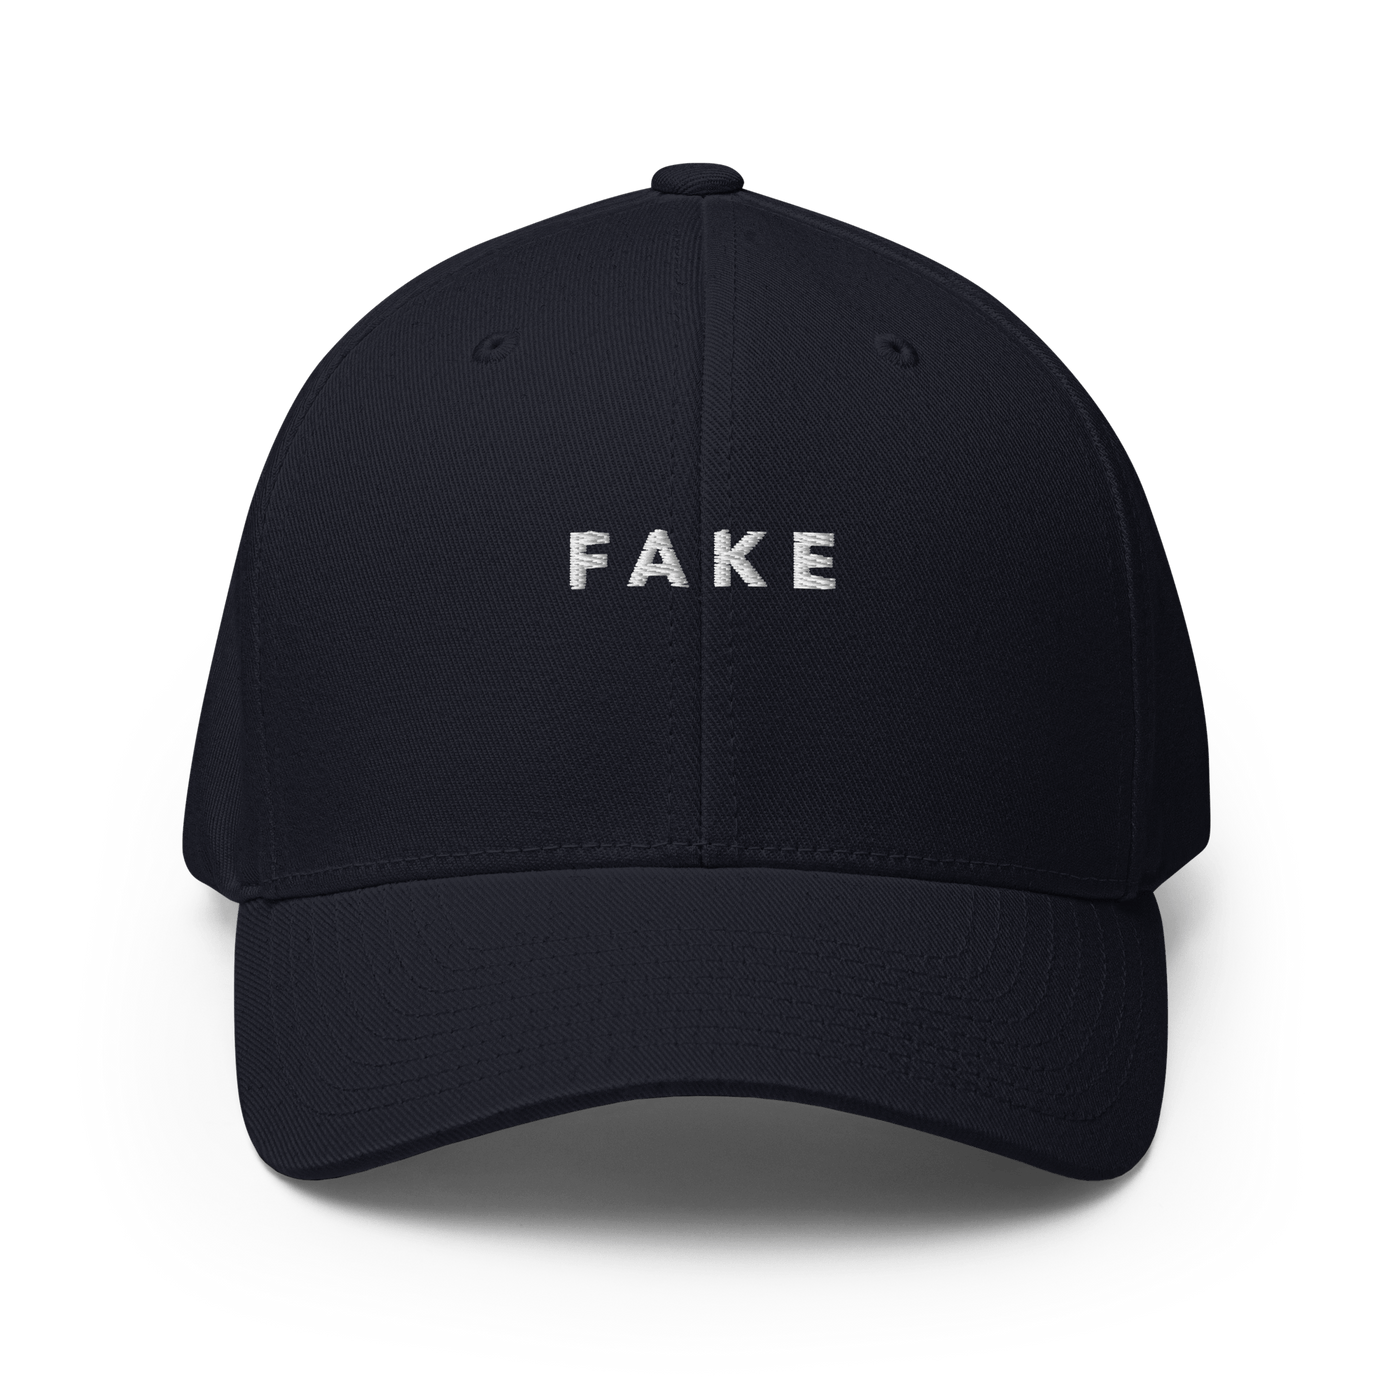 FAKE Flexfit Cap - Dark Navy - S/M - Just Another Cap Store